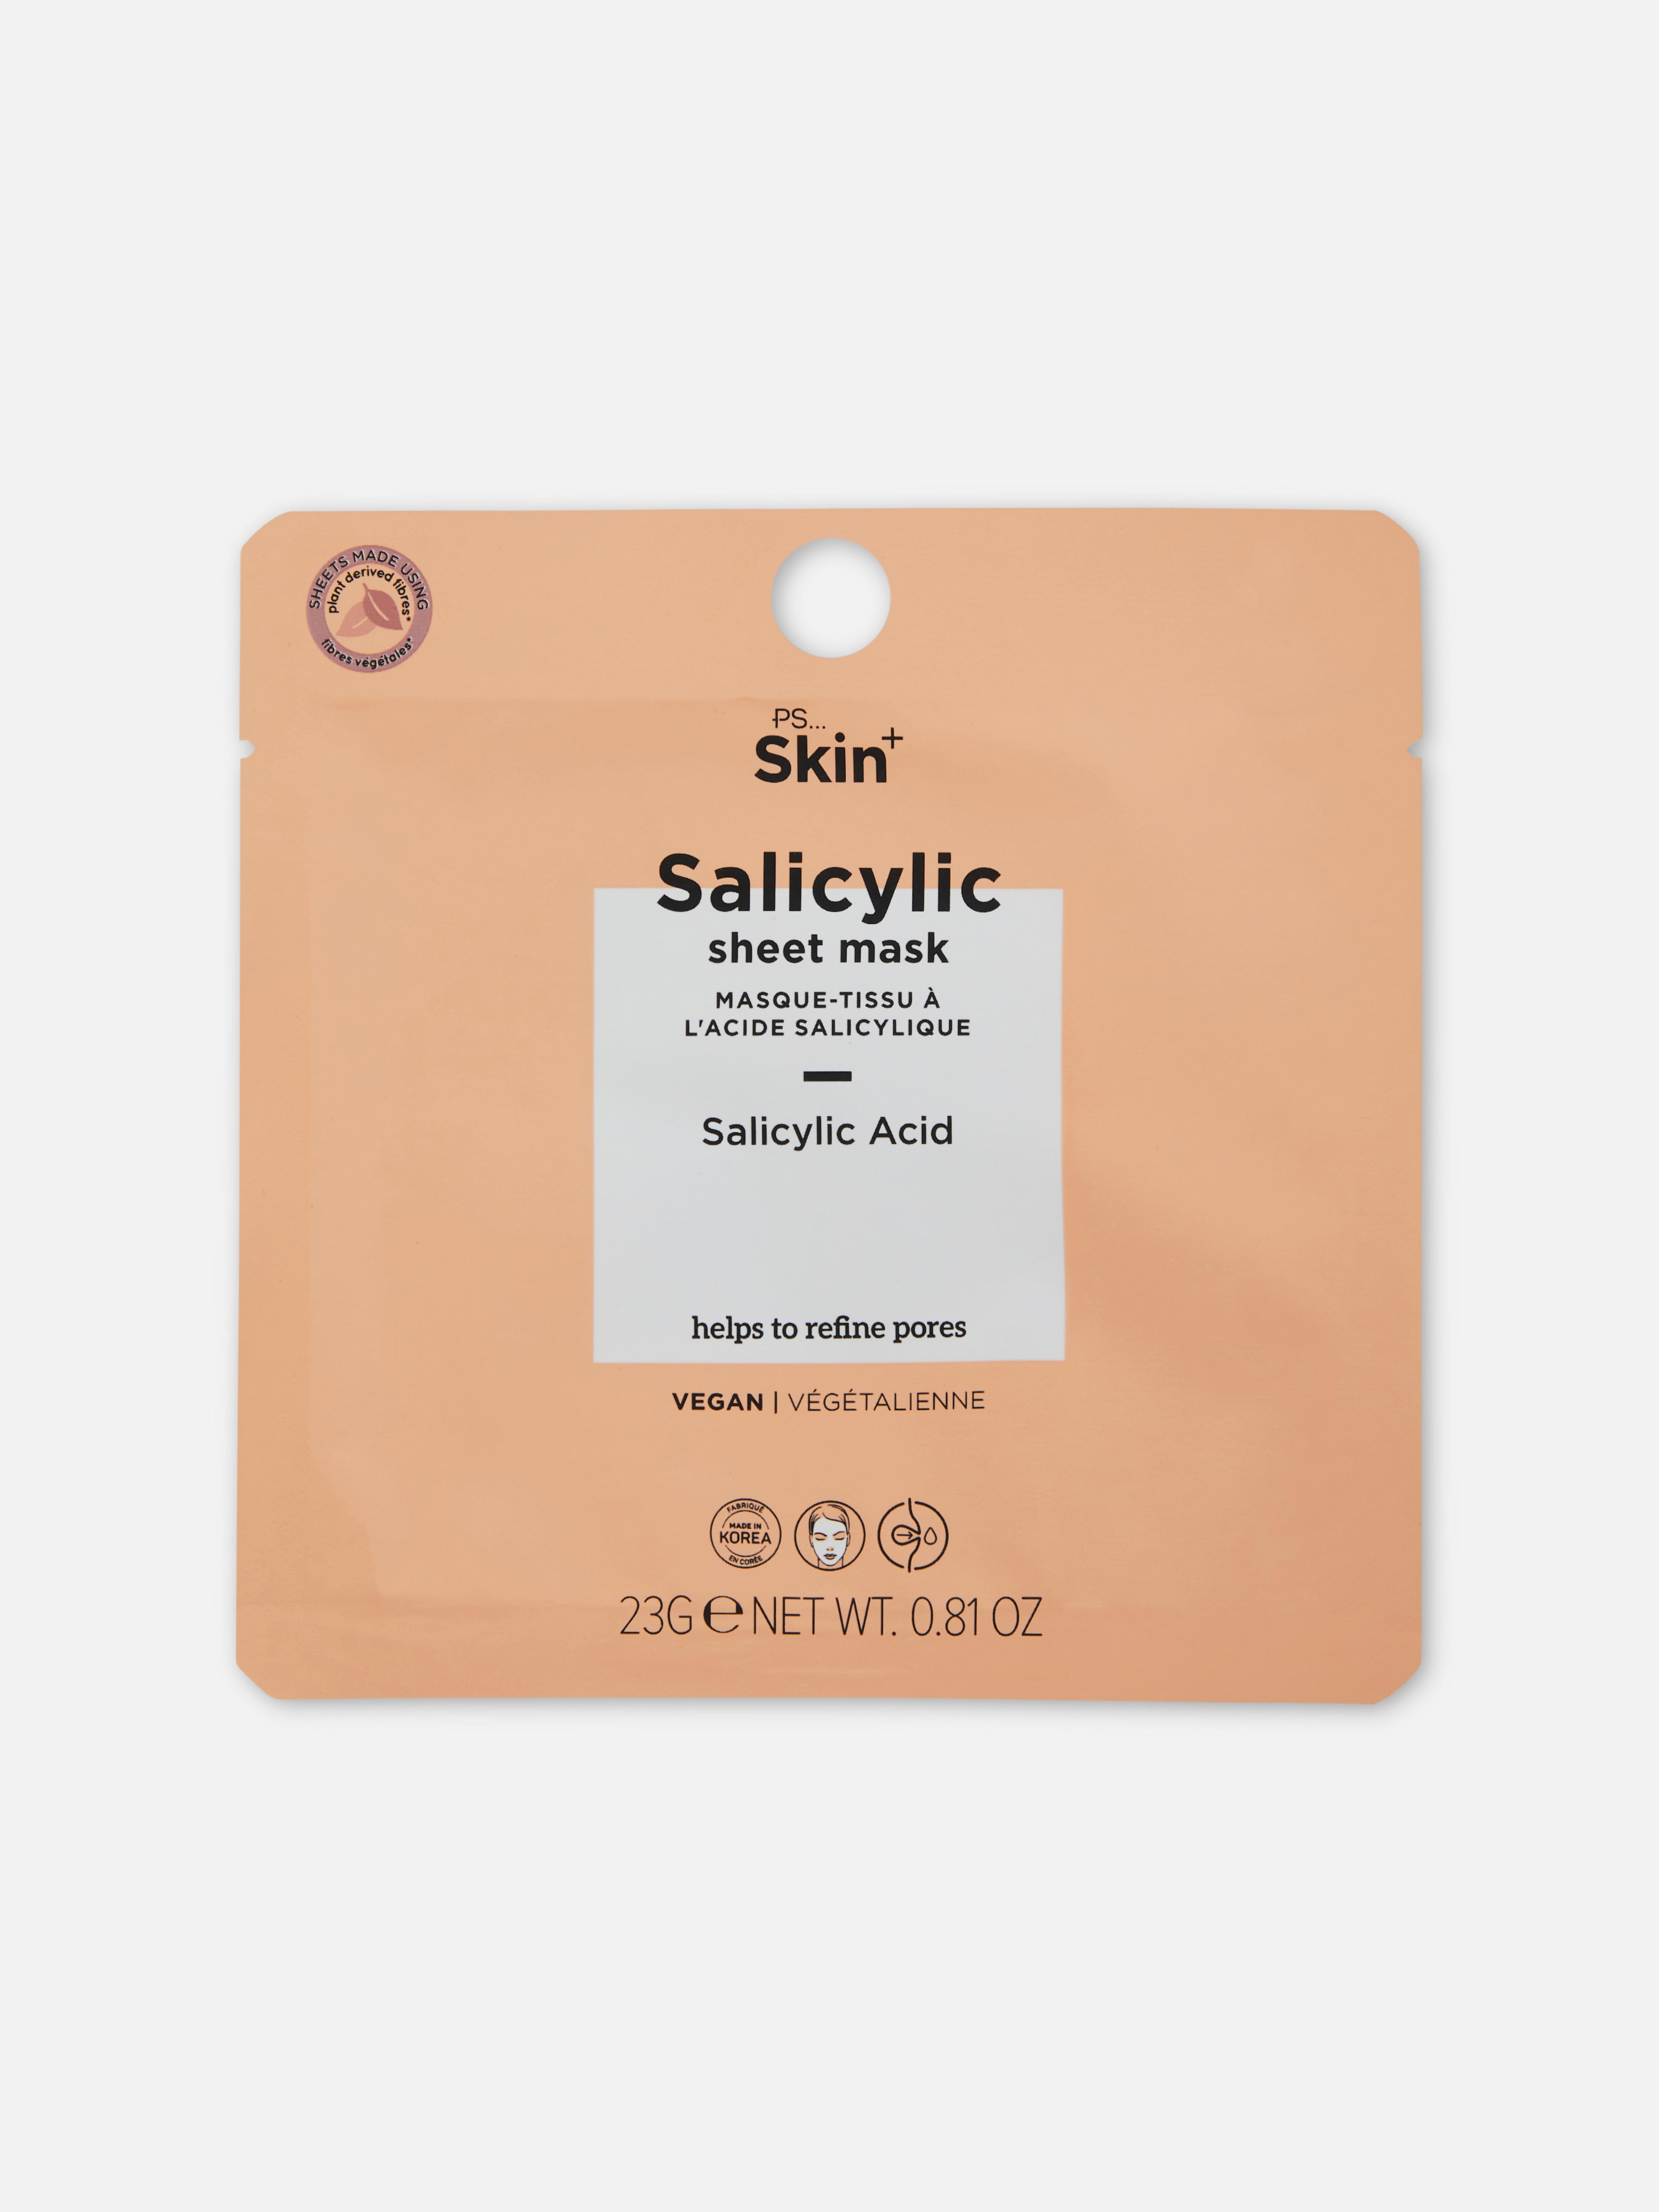 PS… Skin + Salicylic Acid Sheet Mask